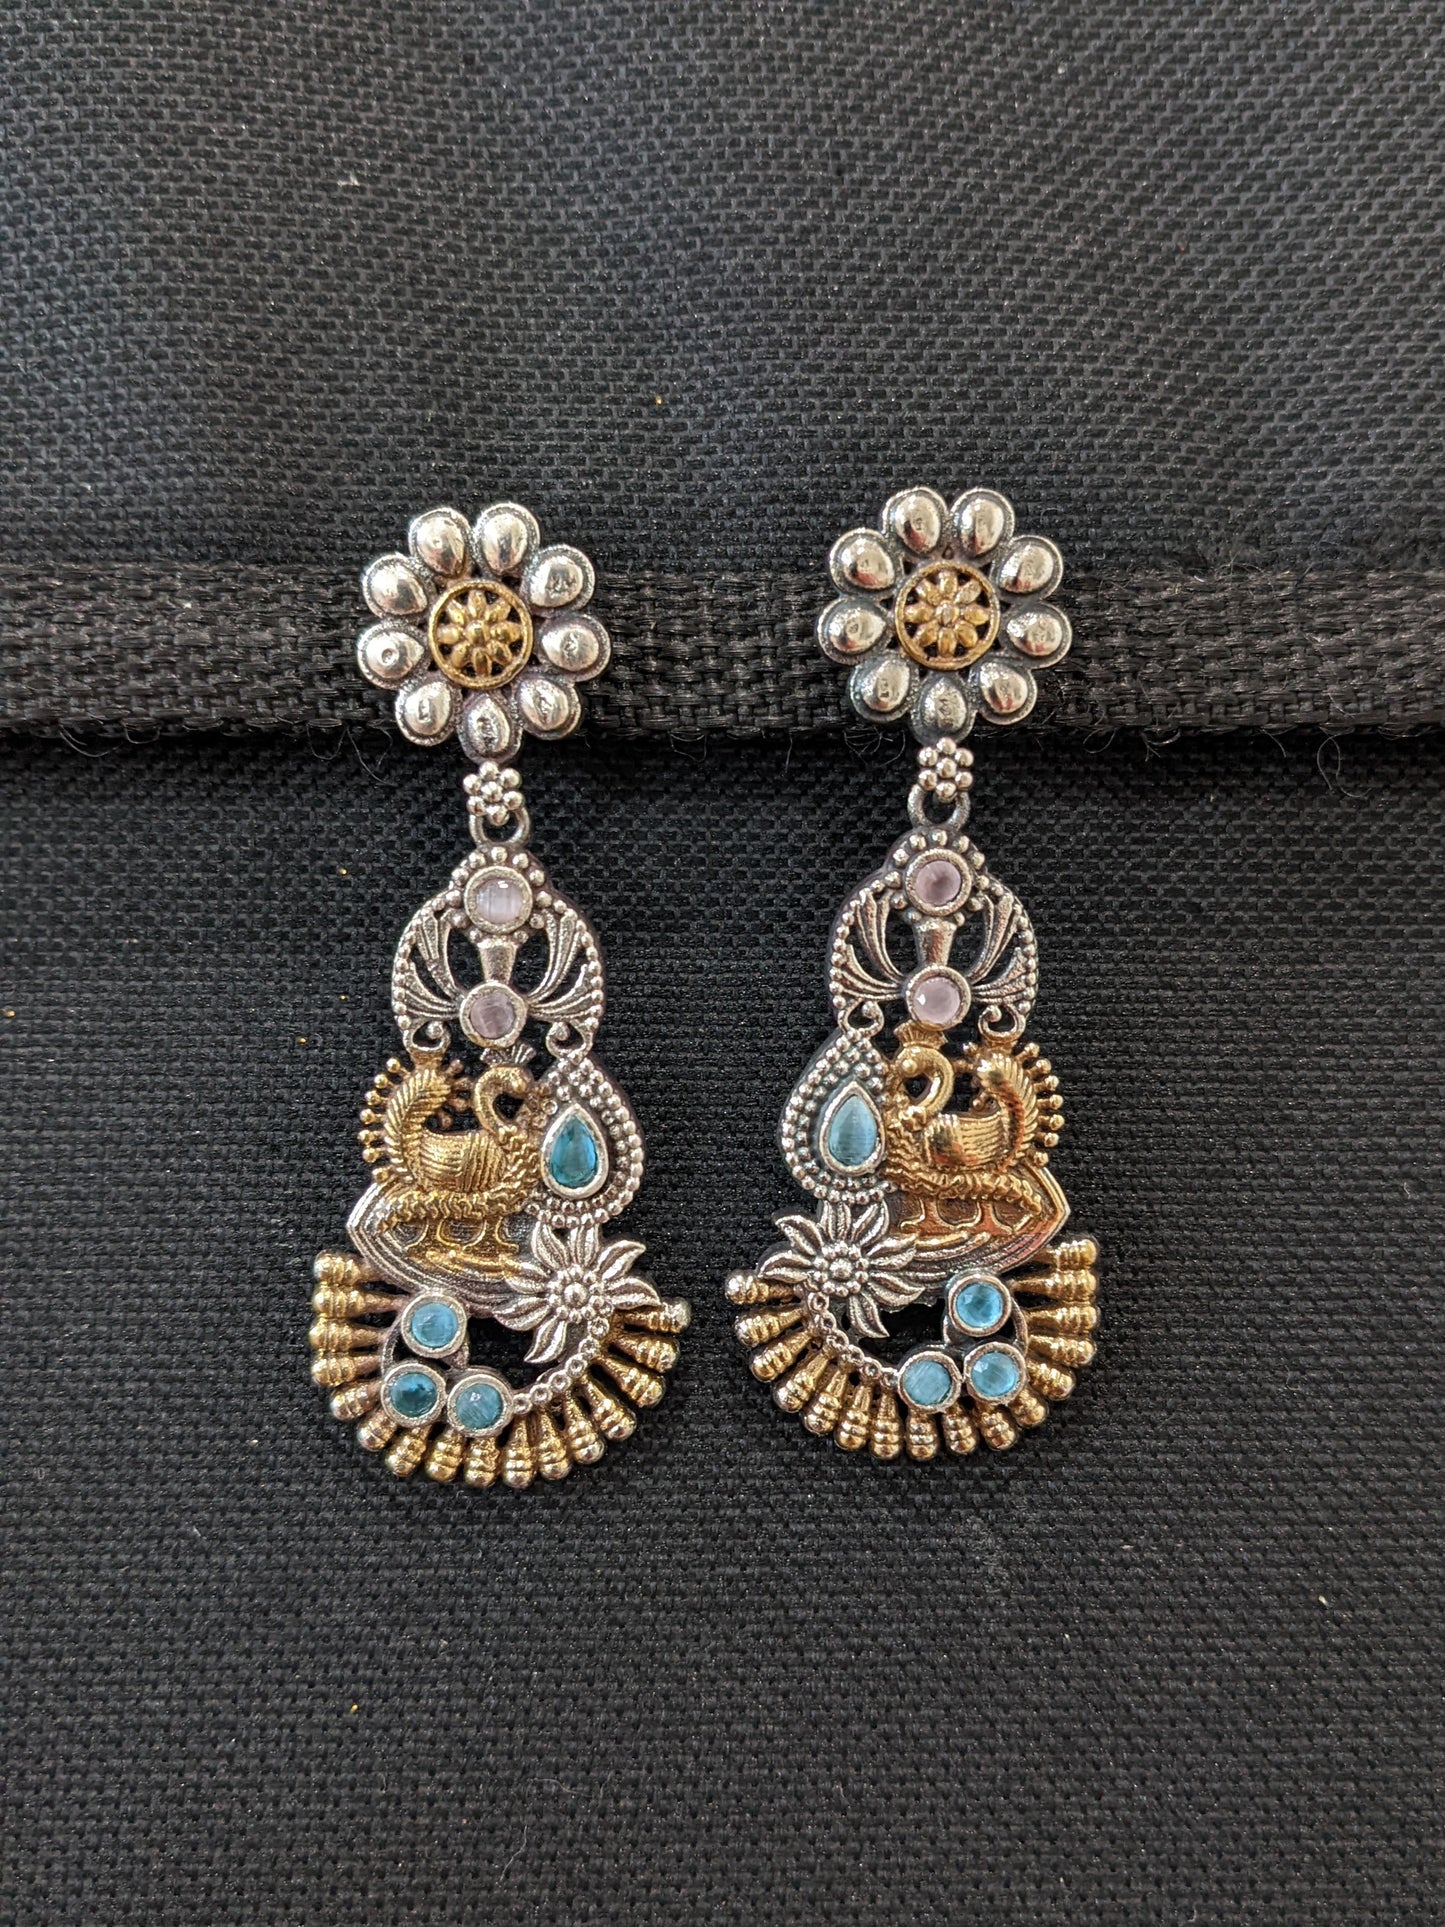 Dual Tone German Silver Peacock Earrings